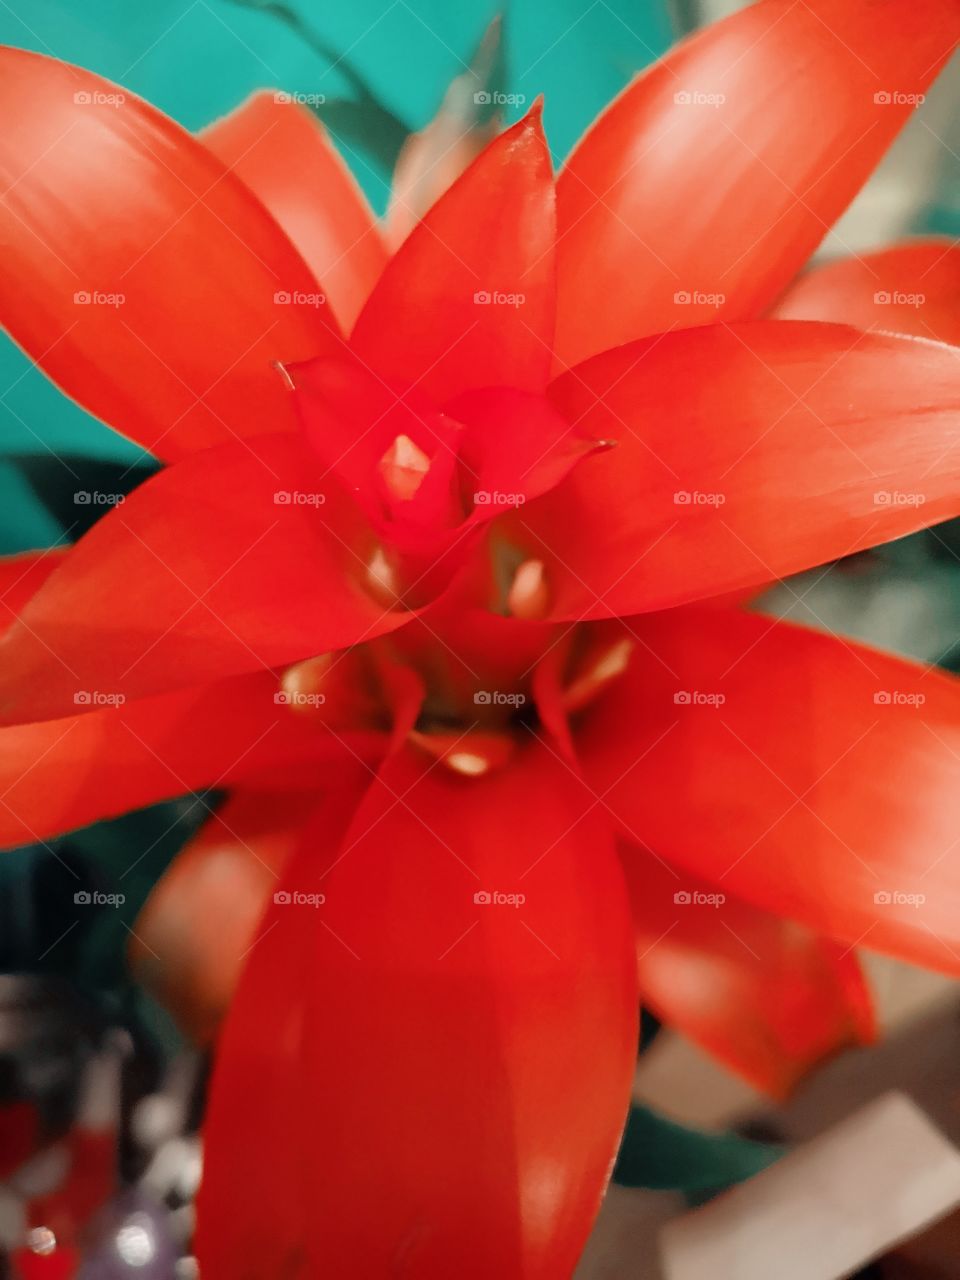 02-11-18 Red Flower 2